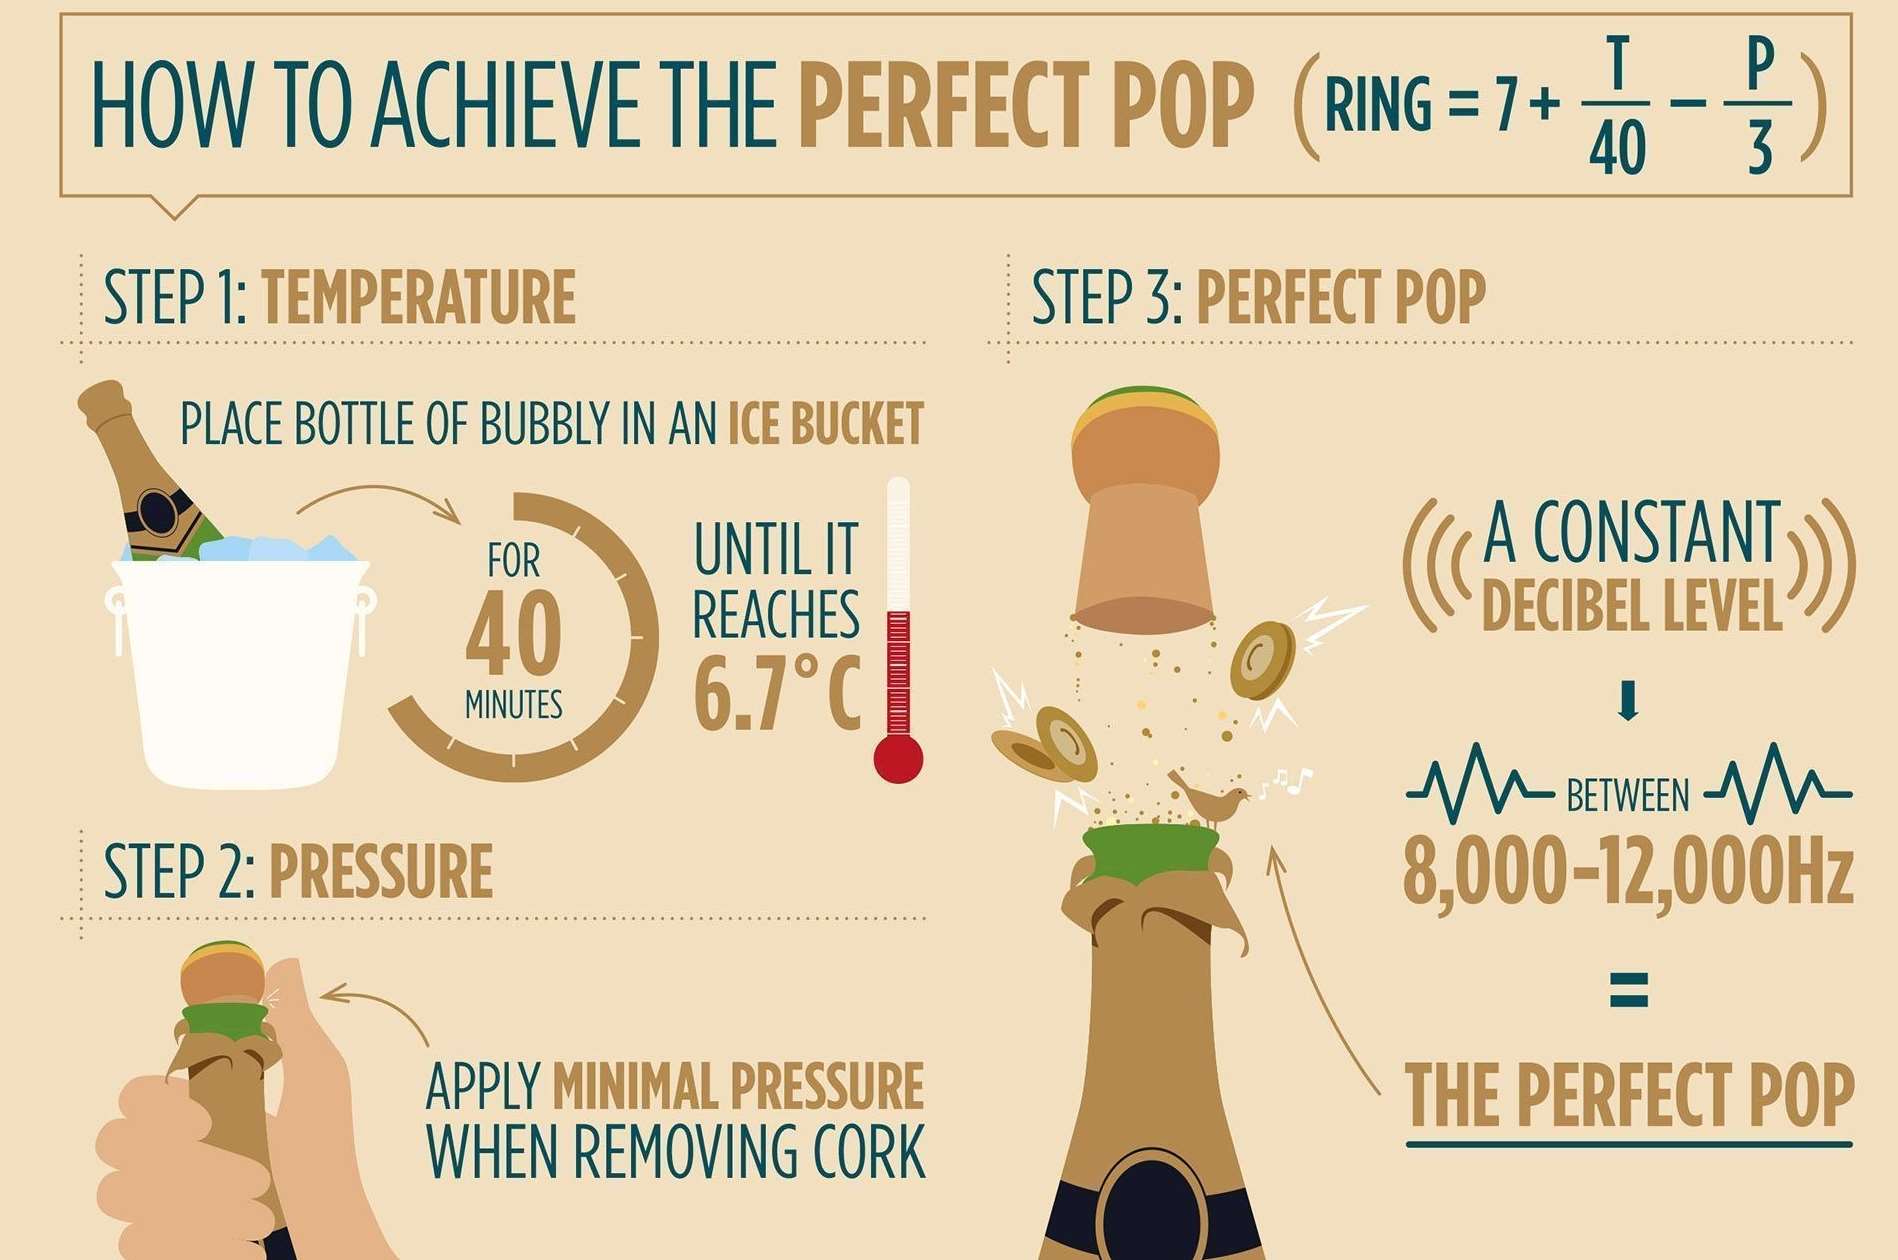 Achieve the perfect pop